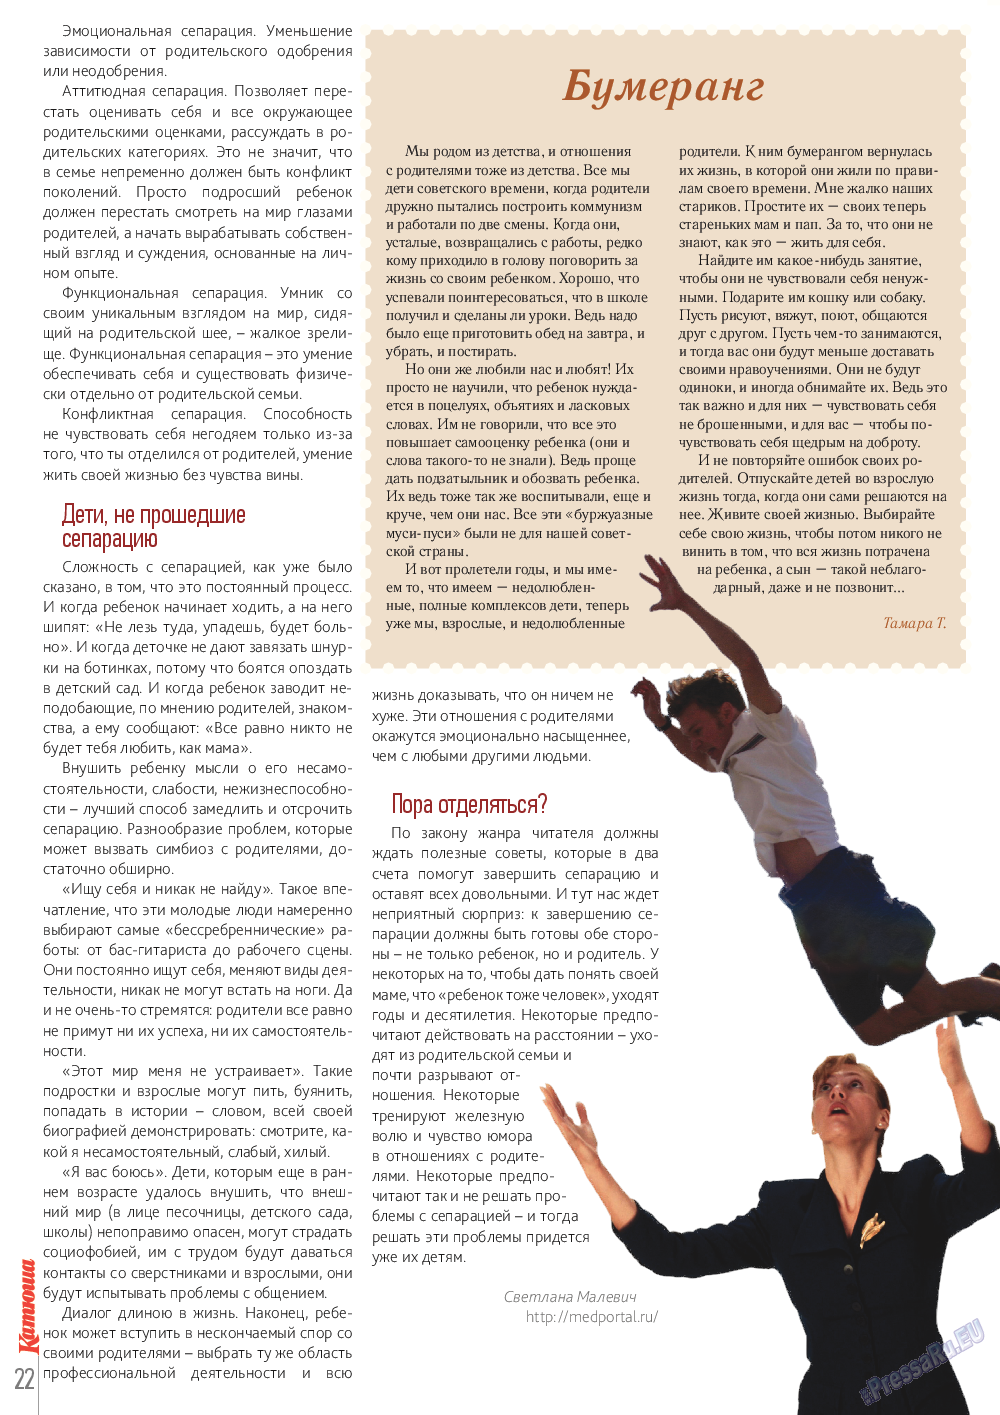 Катюша, журнал. 2013 №37 стр.22